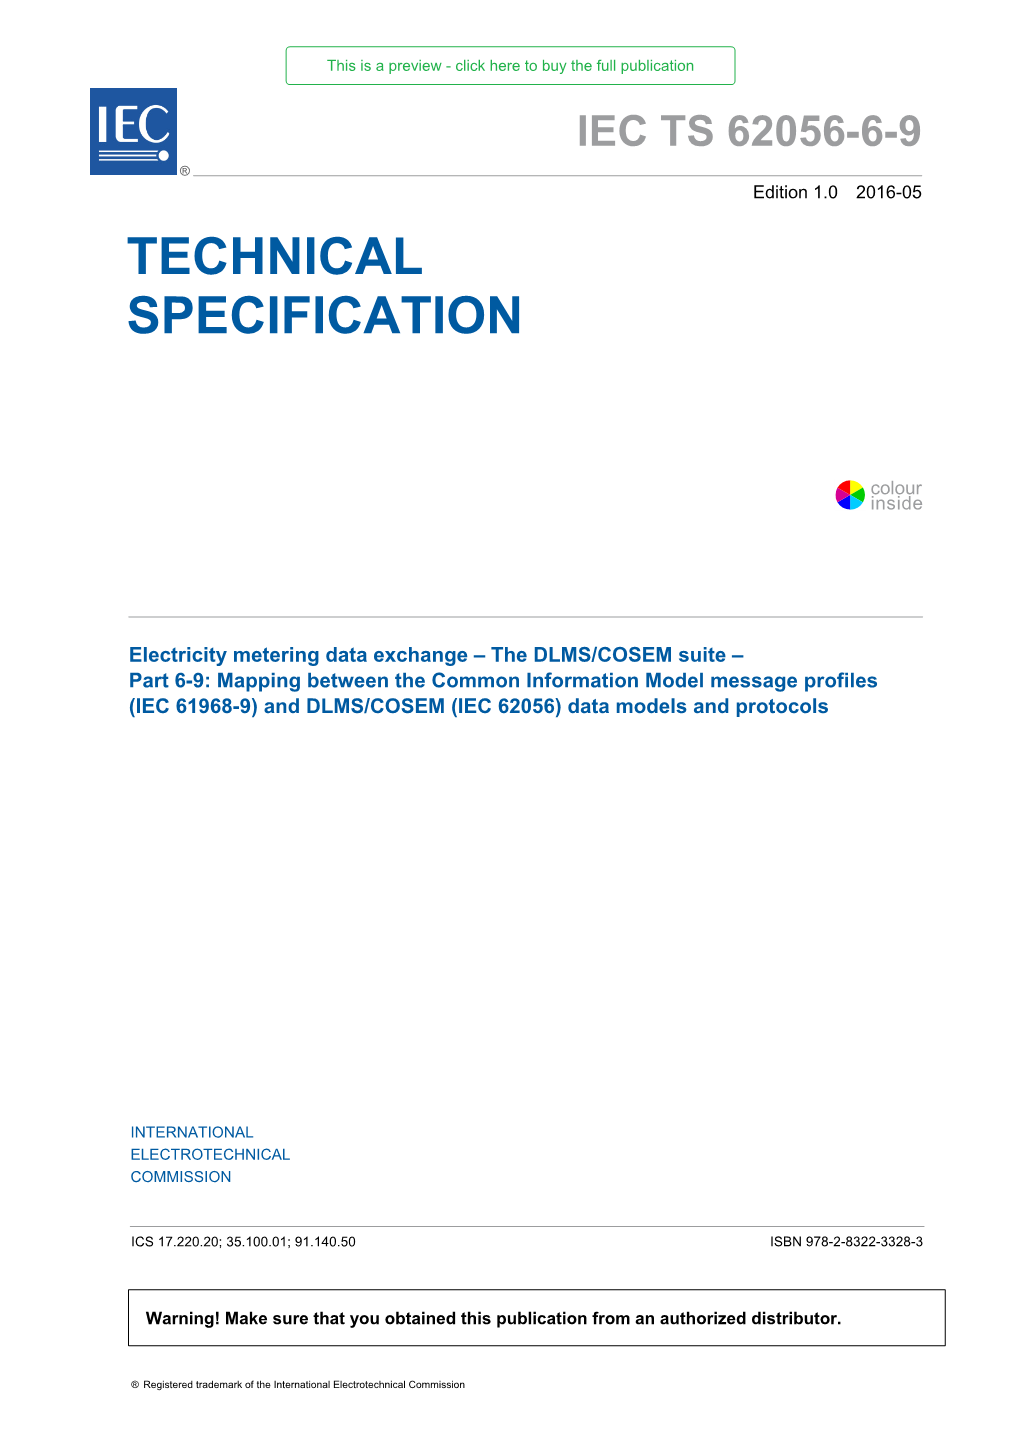 IEC TS 62056-6-9 ® Edition 1.0 2016-05